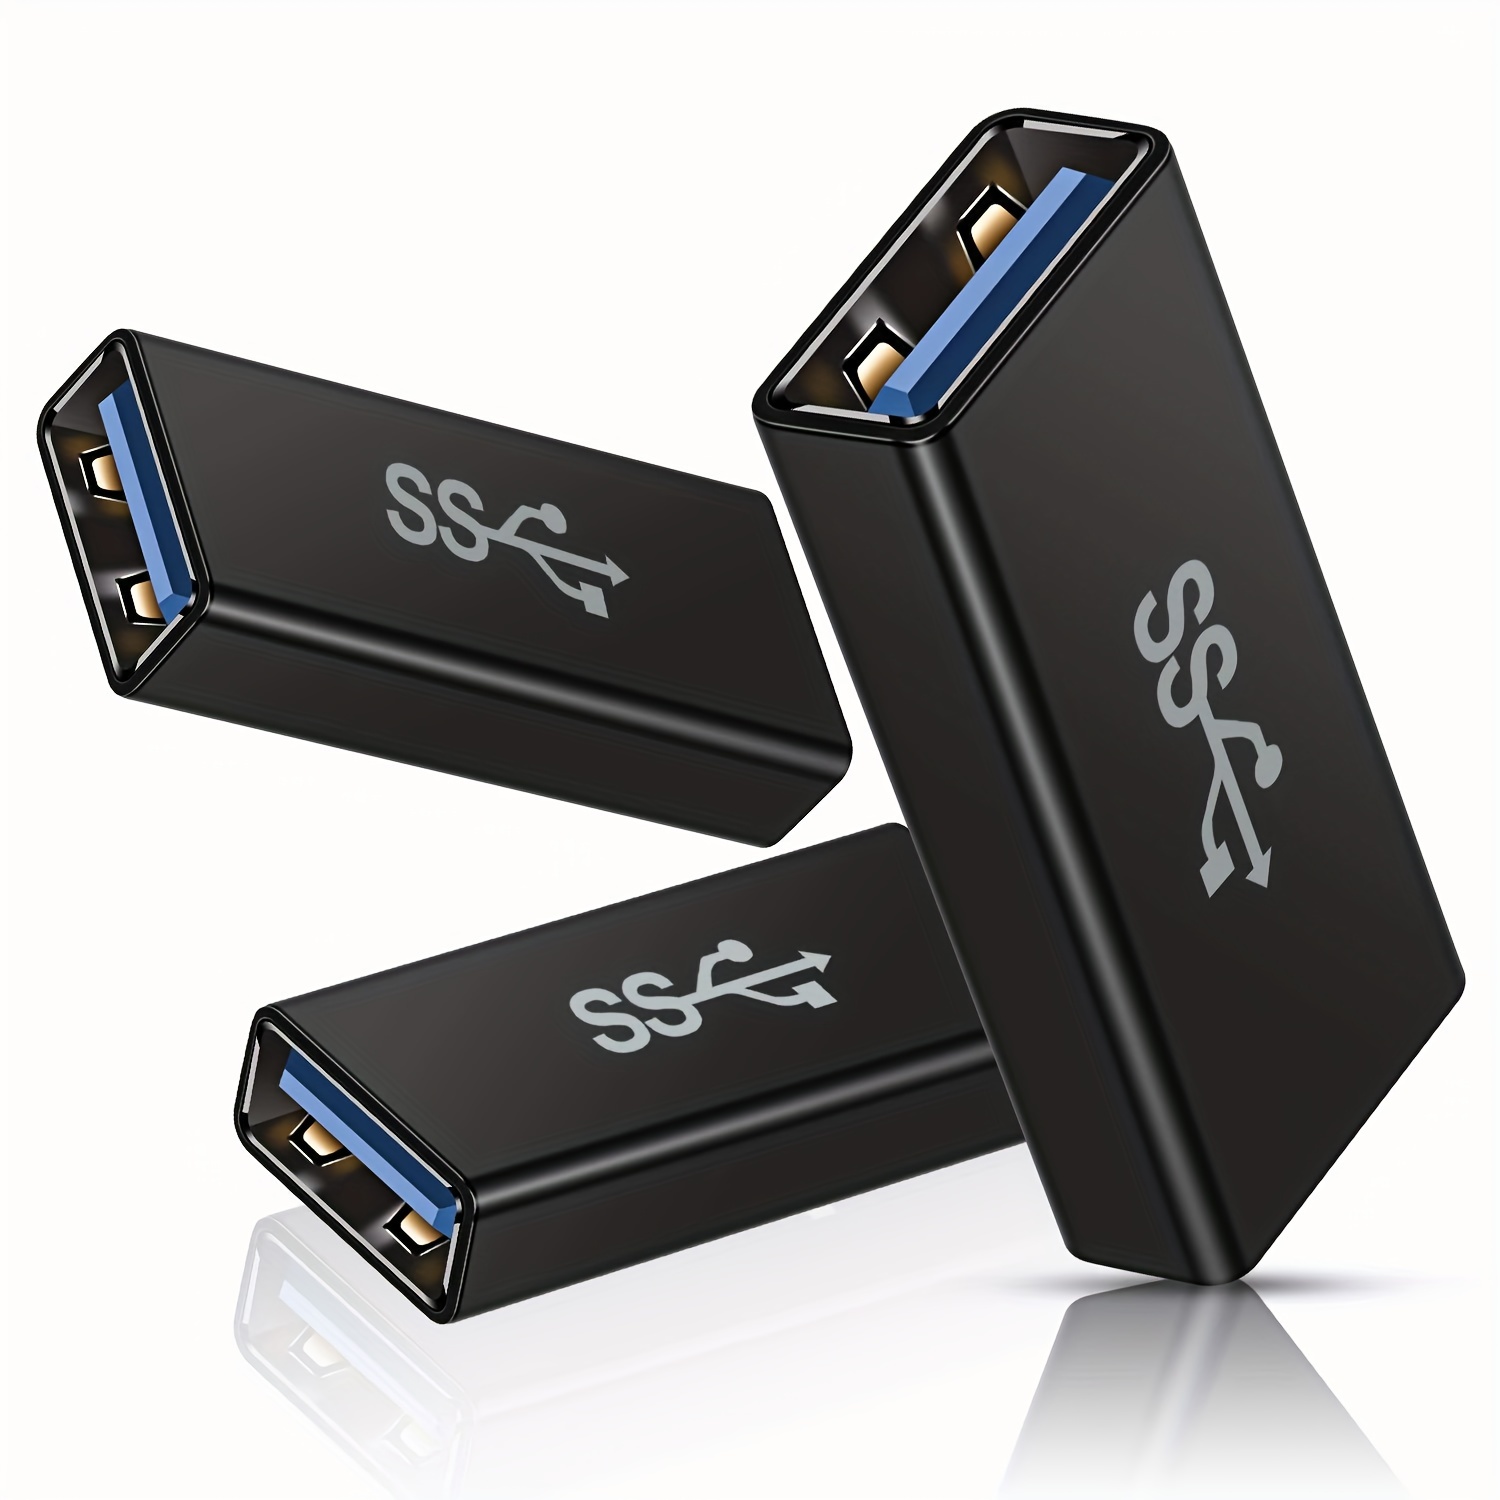  CY USB 3.0 hembra a doble USB macho extra Power Data Y Cable de  extensión para disco duro móvil de 2.5 Color negro : Electrónica